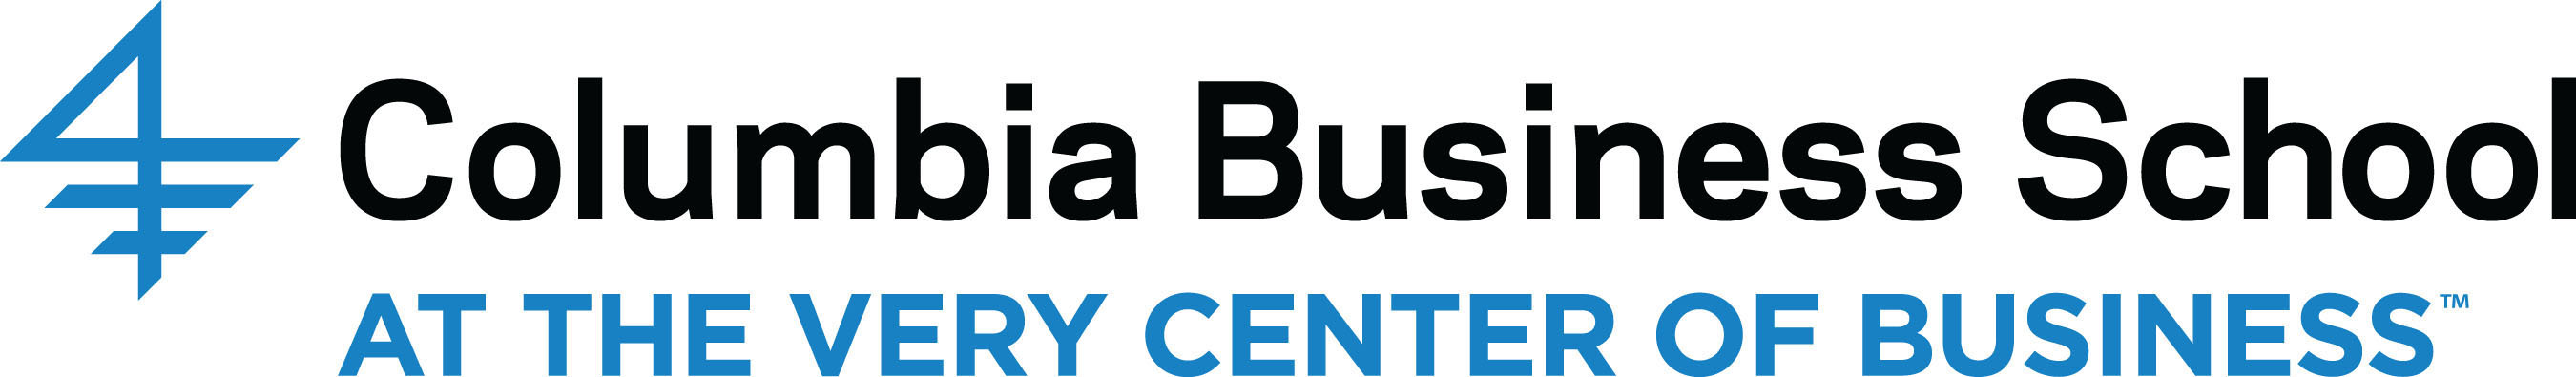 Columbia Business School Logo.